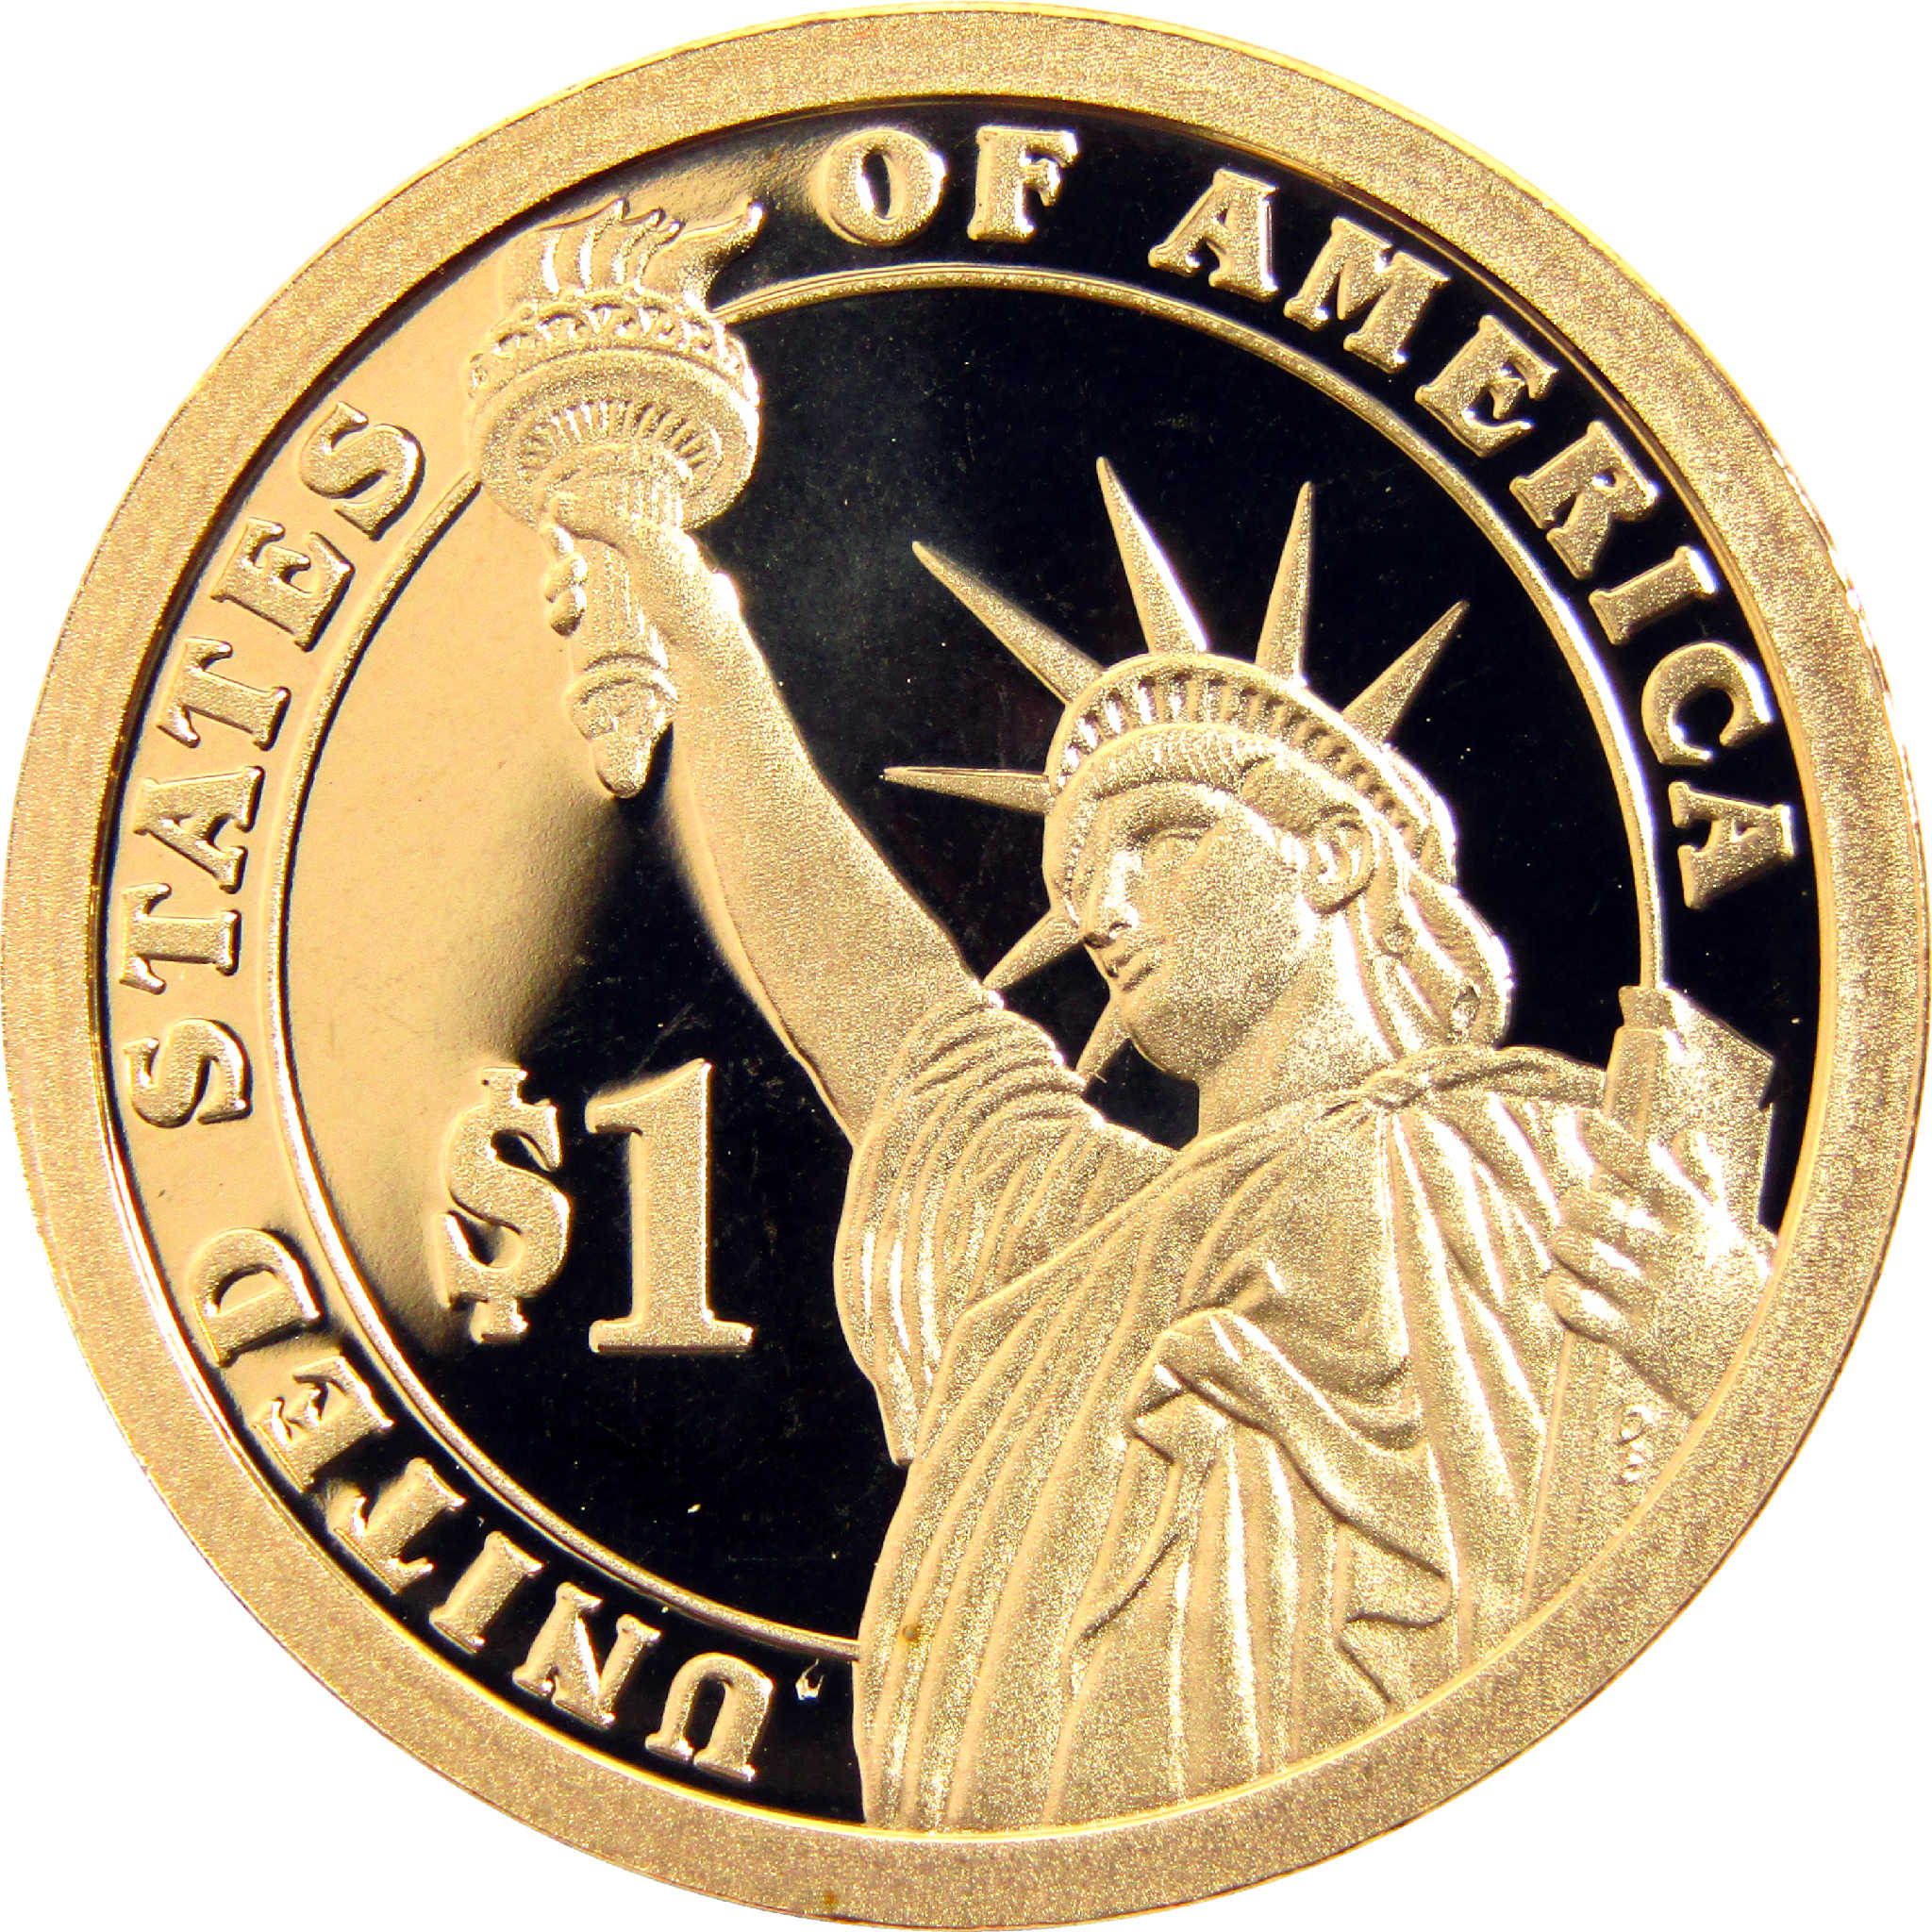 2014 S Franklin D Roosevelt Presidential Dollar Choice Proof $1 Coin